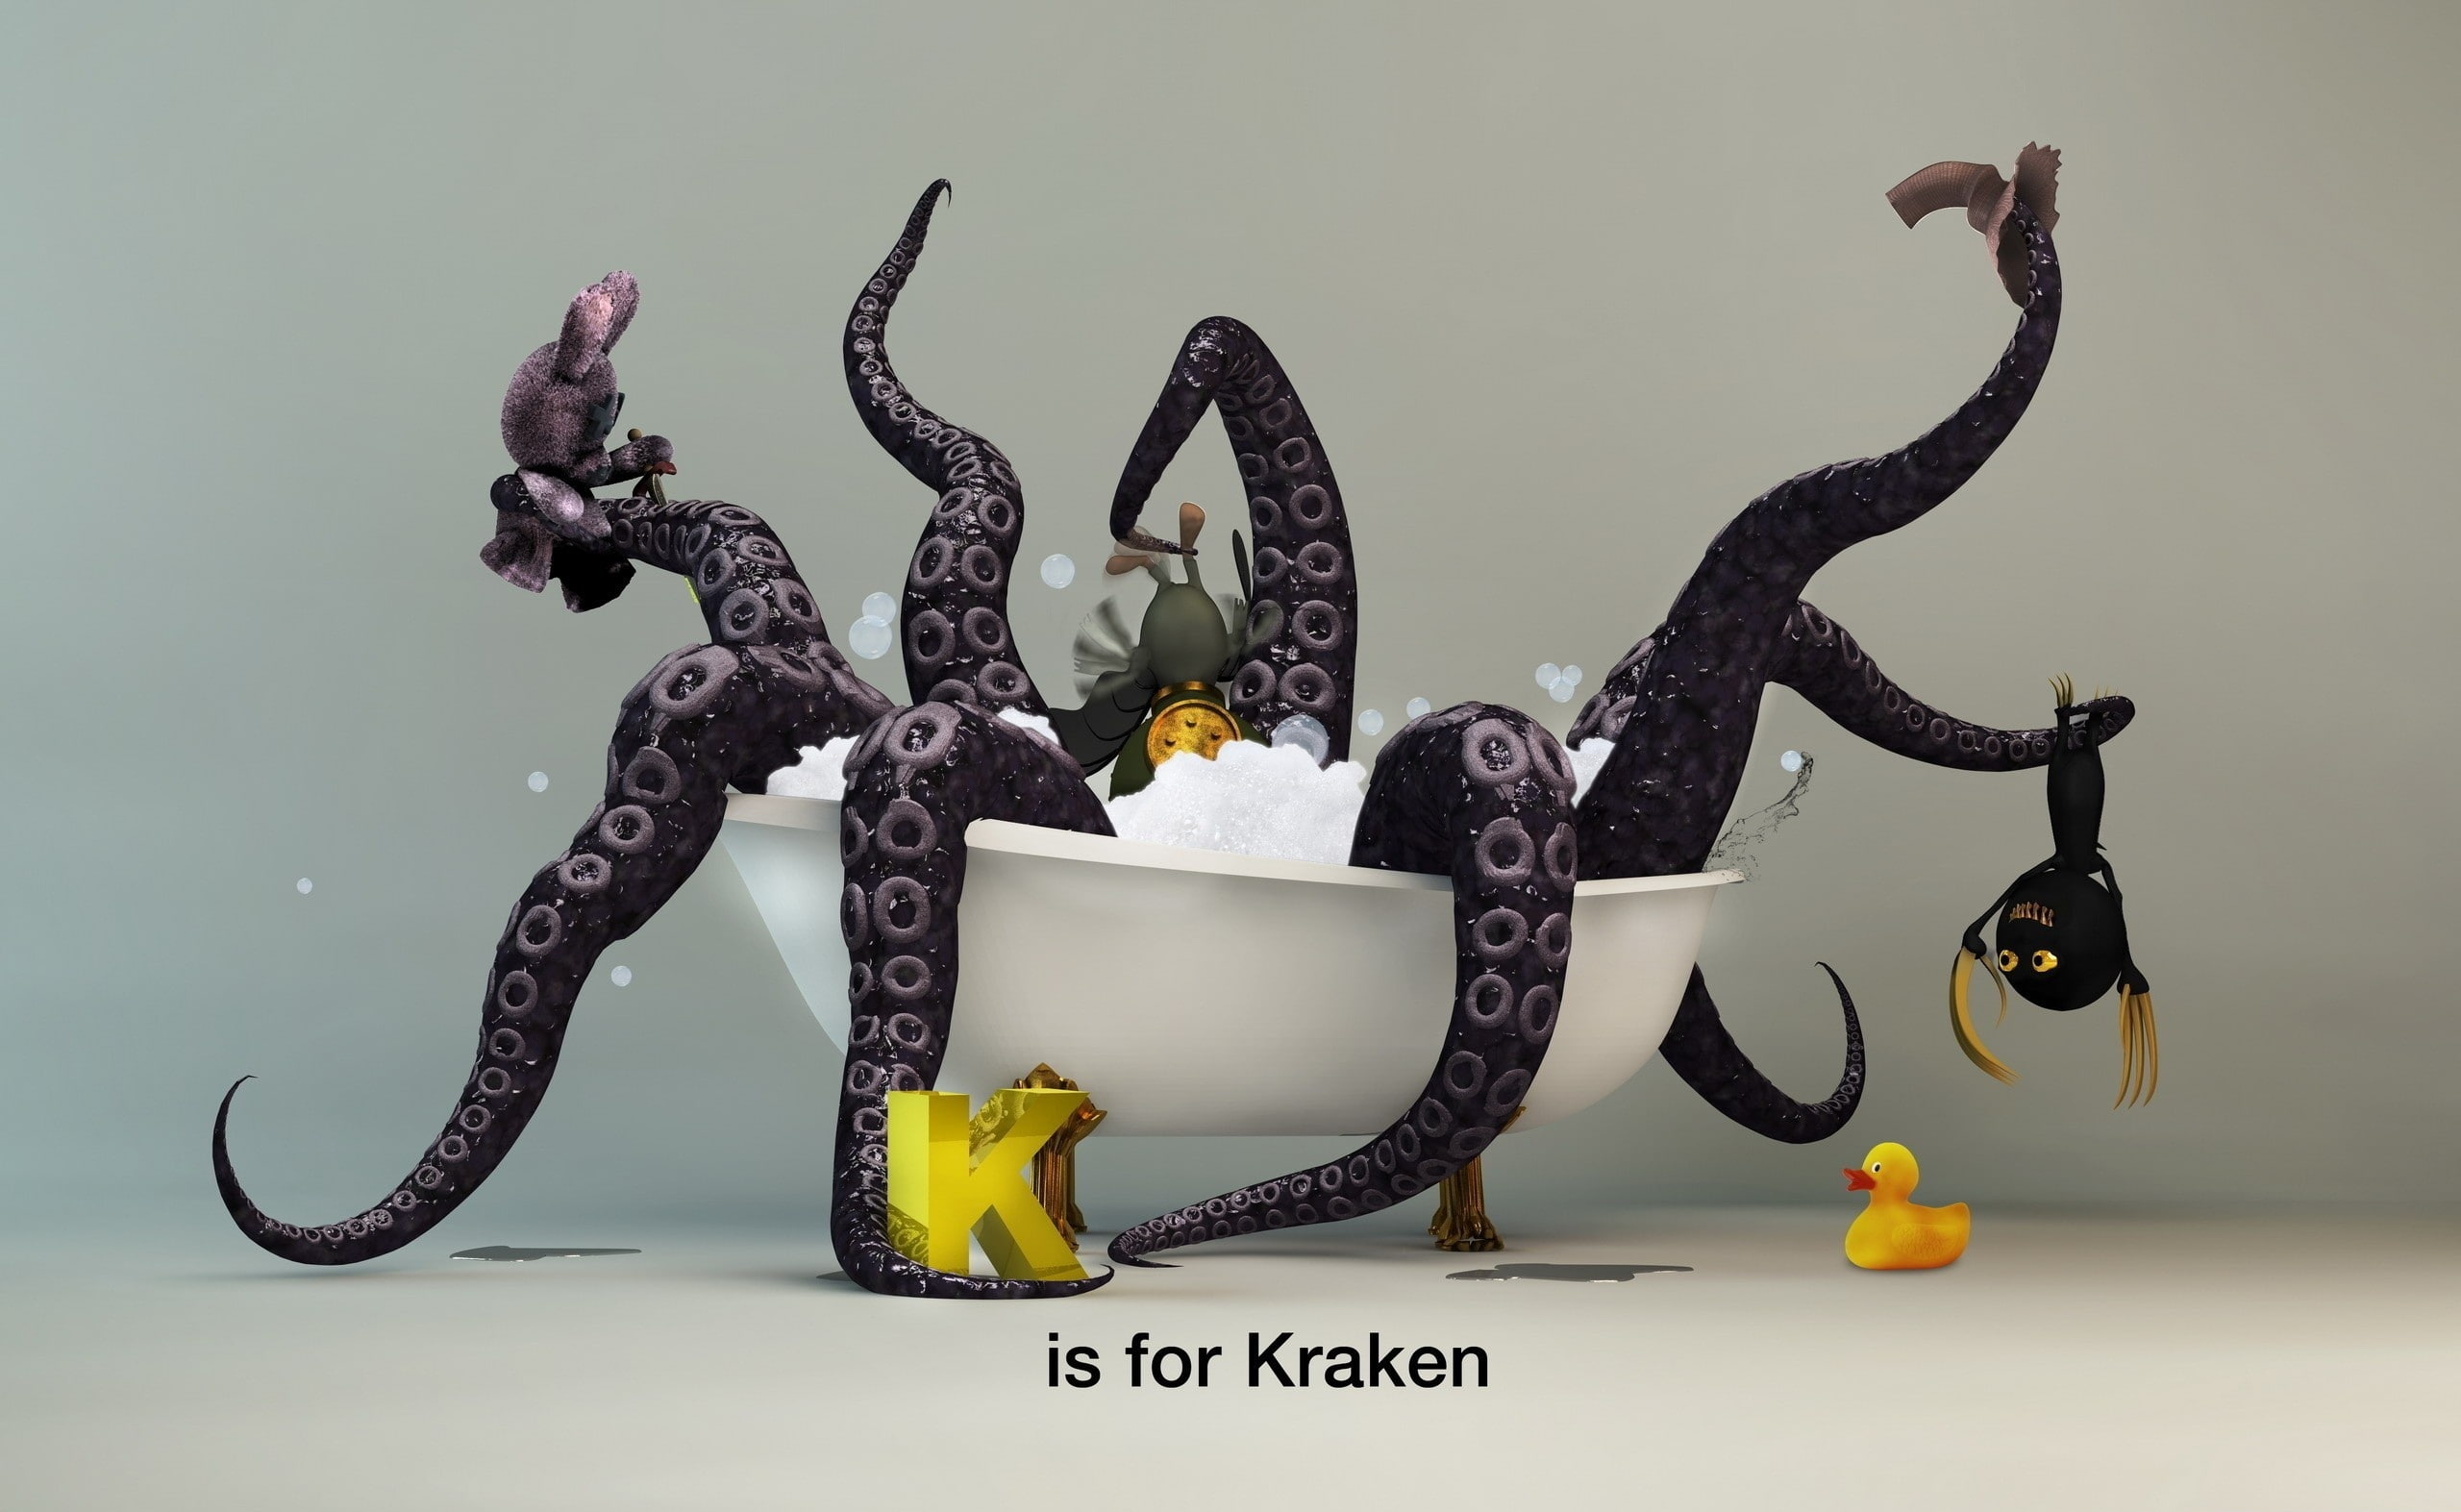 Funny Kraken Monster, octopus illustration, indoors, text, food